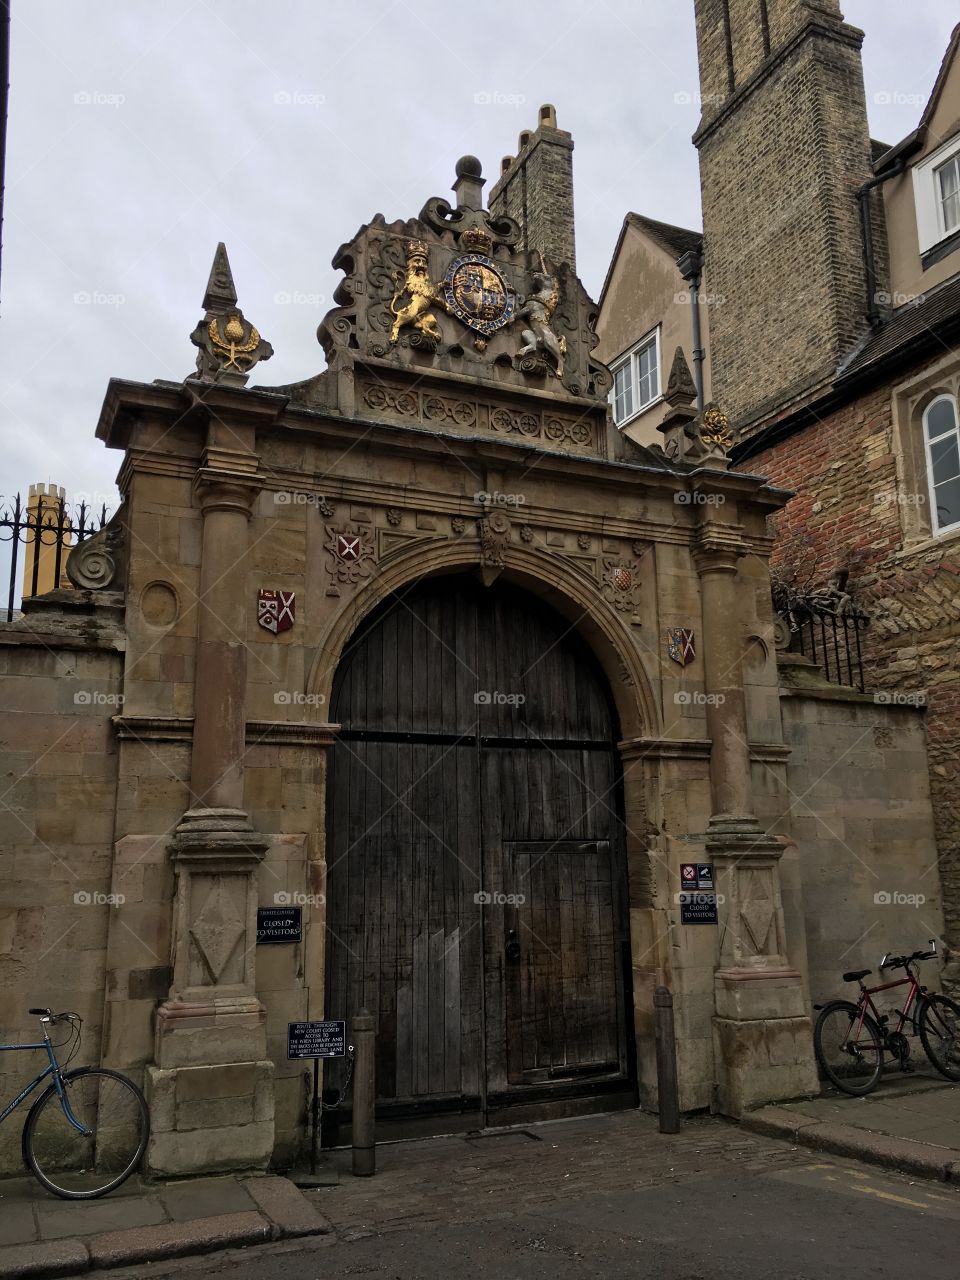 Cambridge city gate
